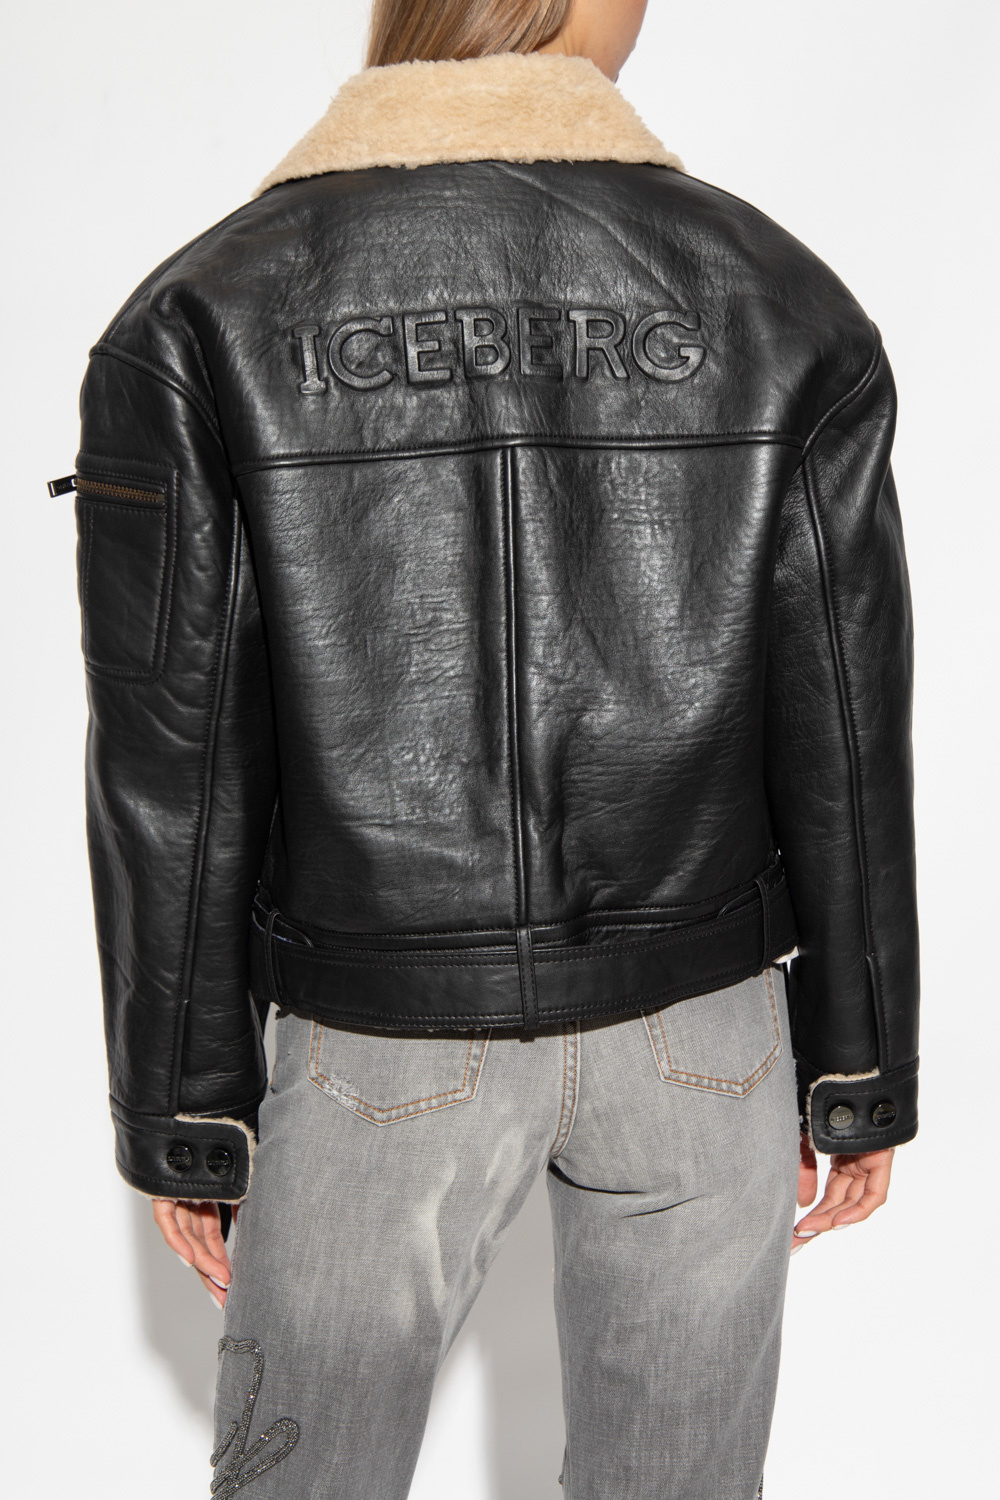 Iceberg Leather Cup jacket